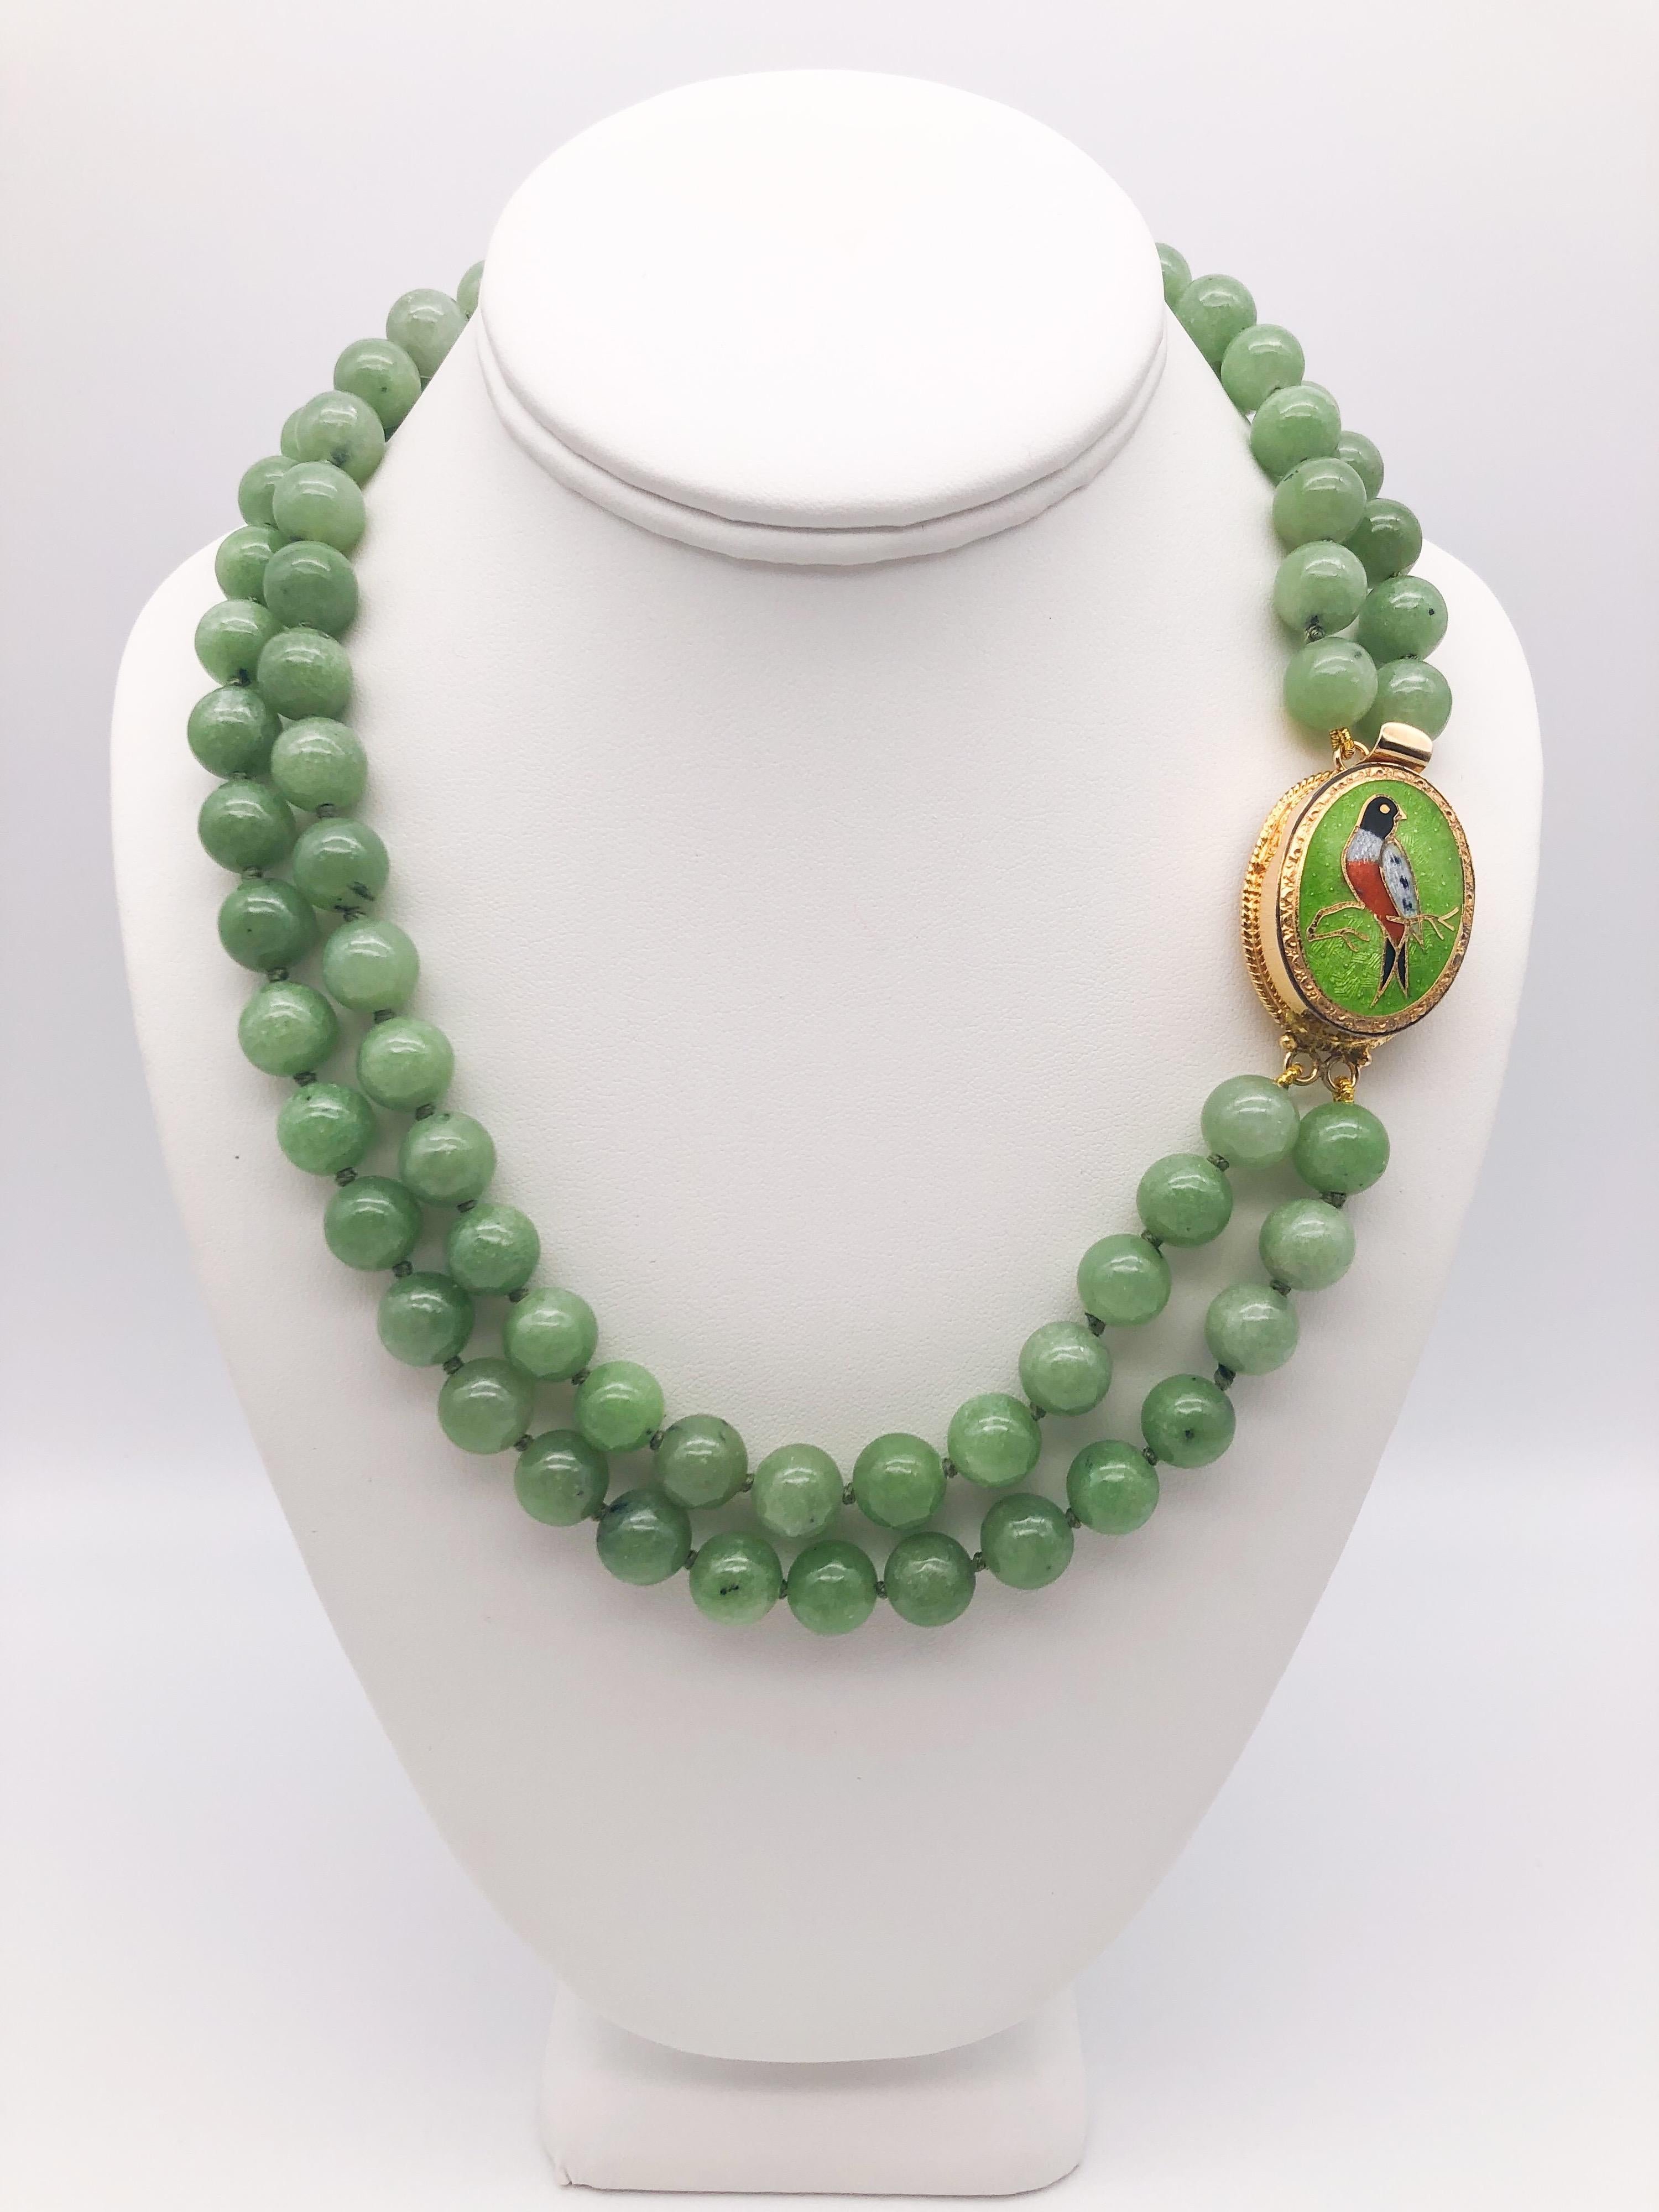 Contemporary A.Jeschel   Burmese Jade 2 strand necklace with Vintage Cloisonné clasp.